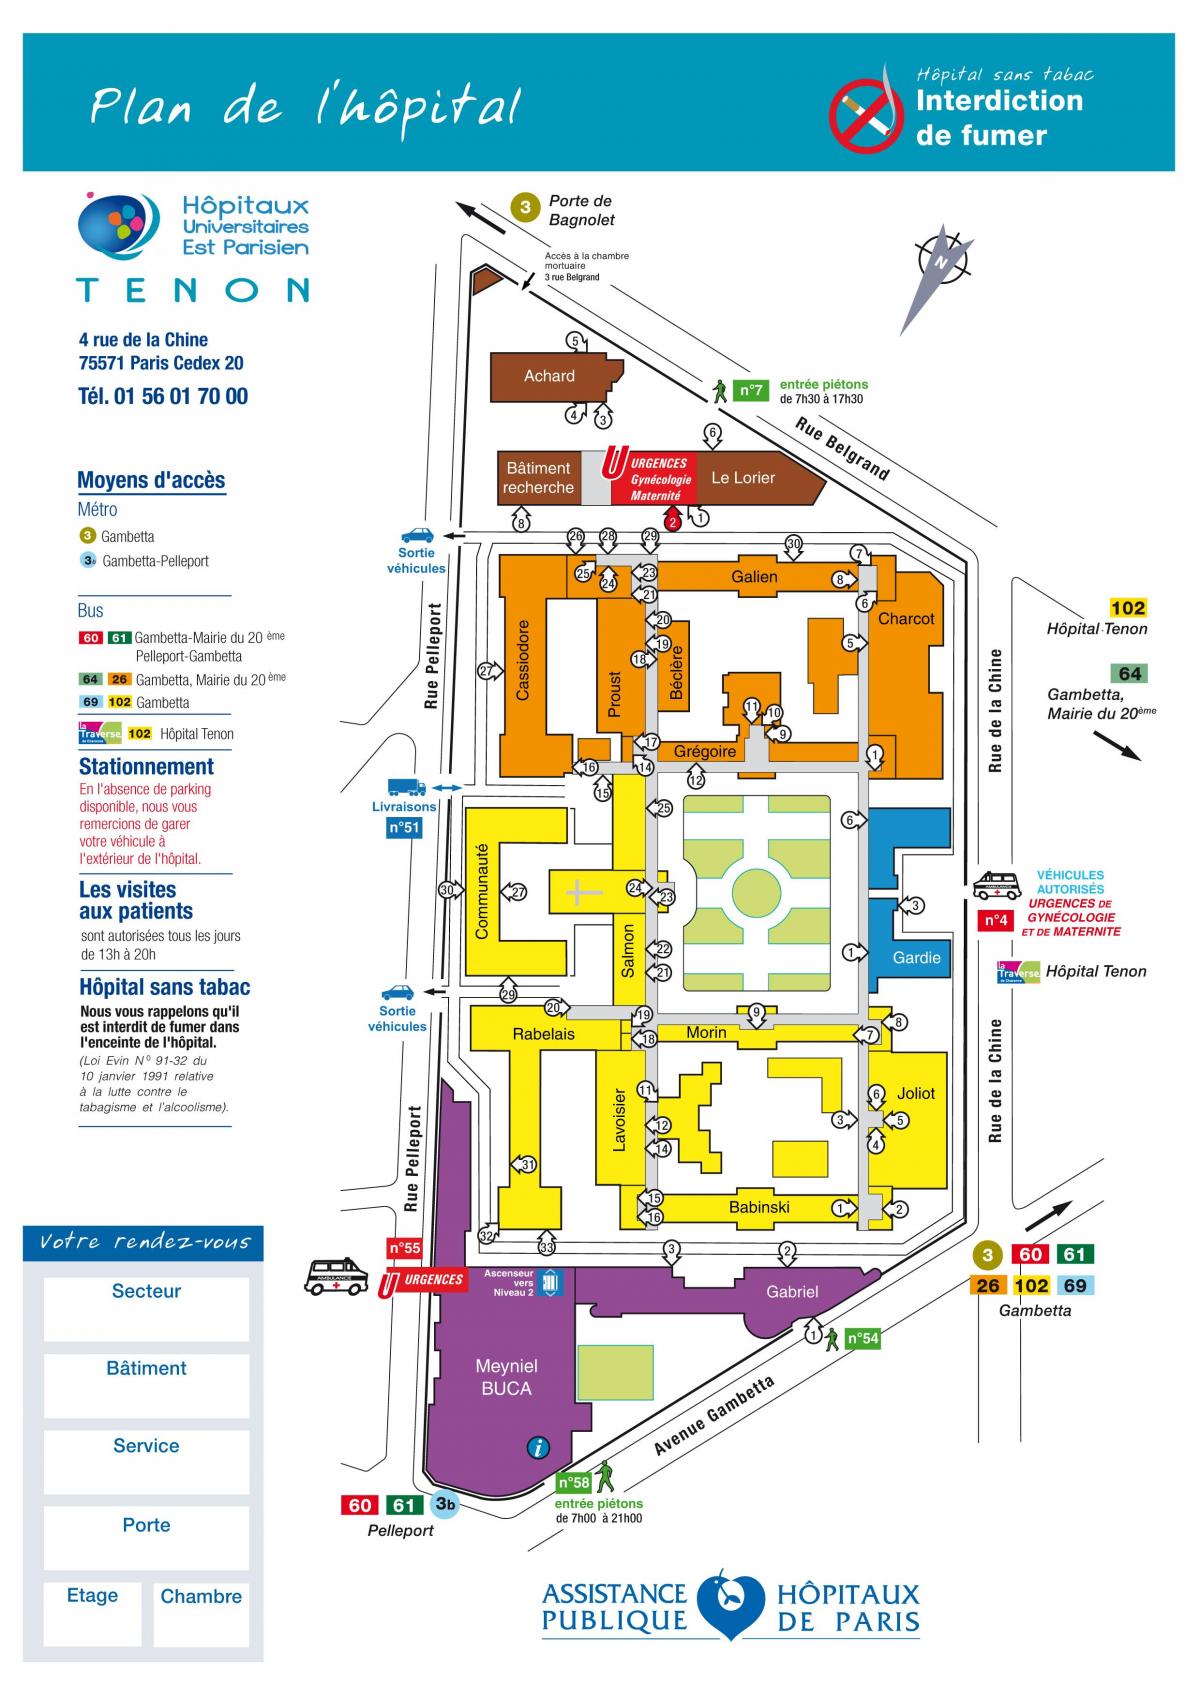 Картата болница tenon